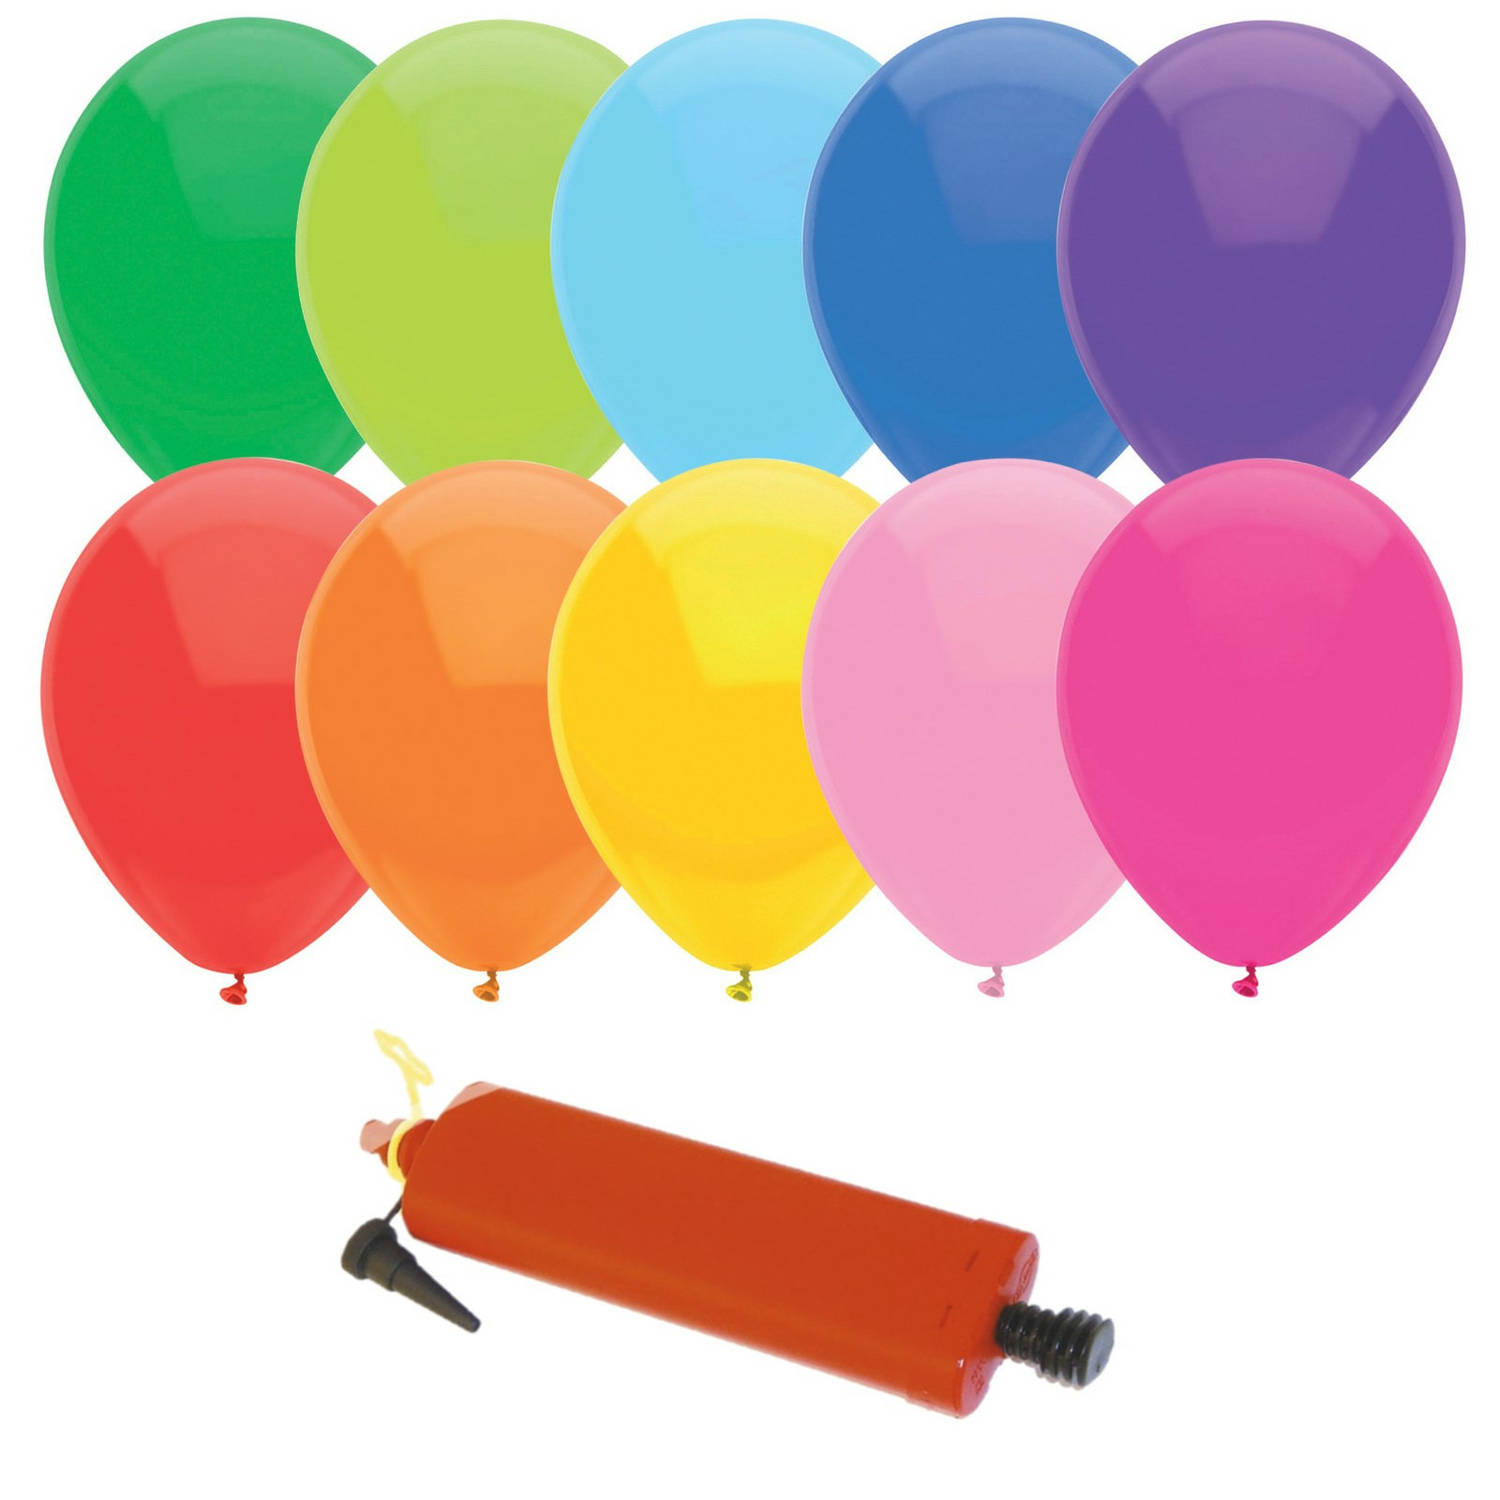 100x gekleurde party ballonnen 27 cm inclusief pomp Ballonnen